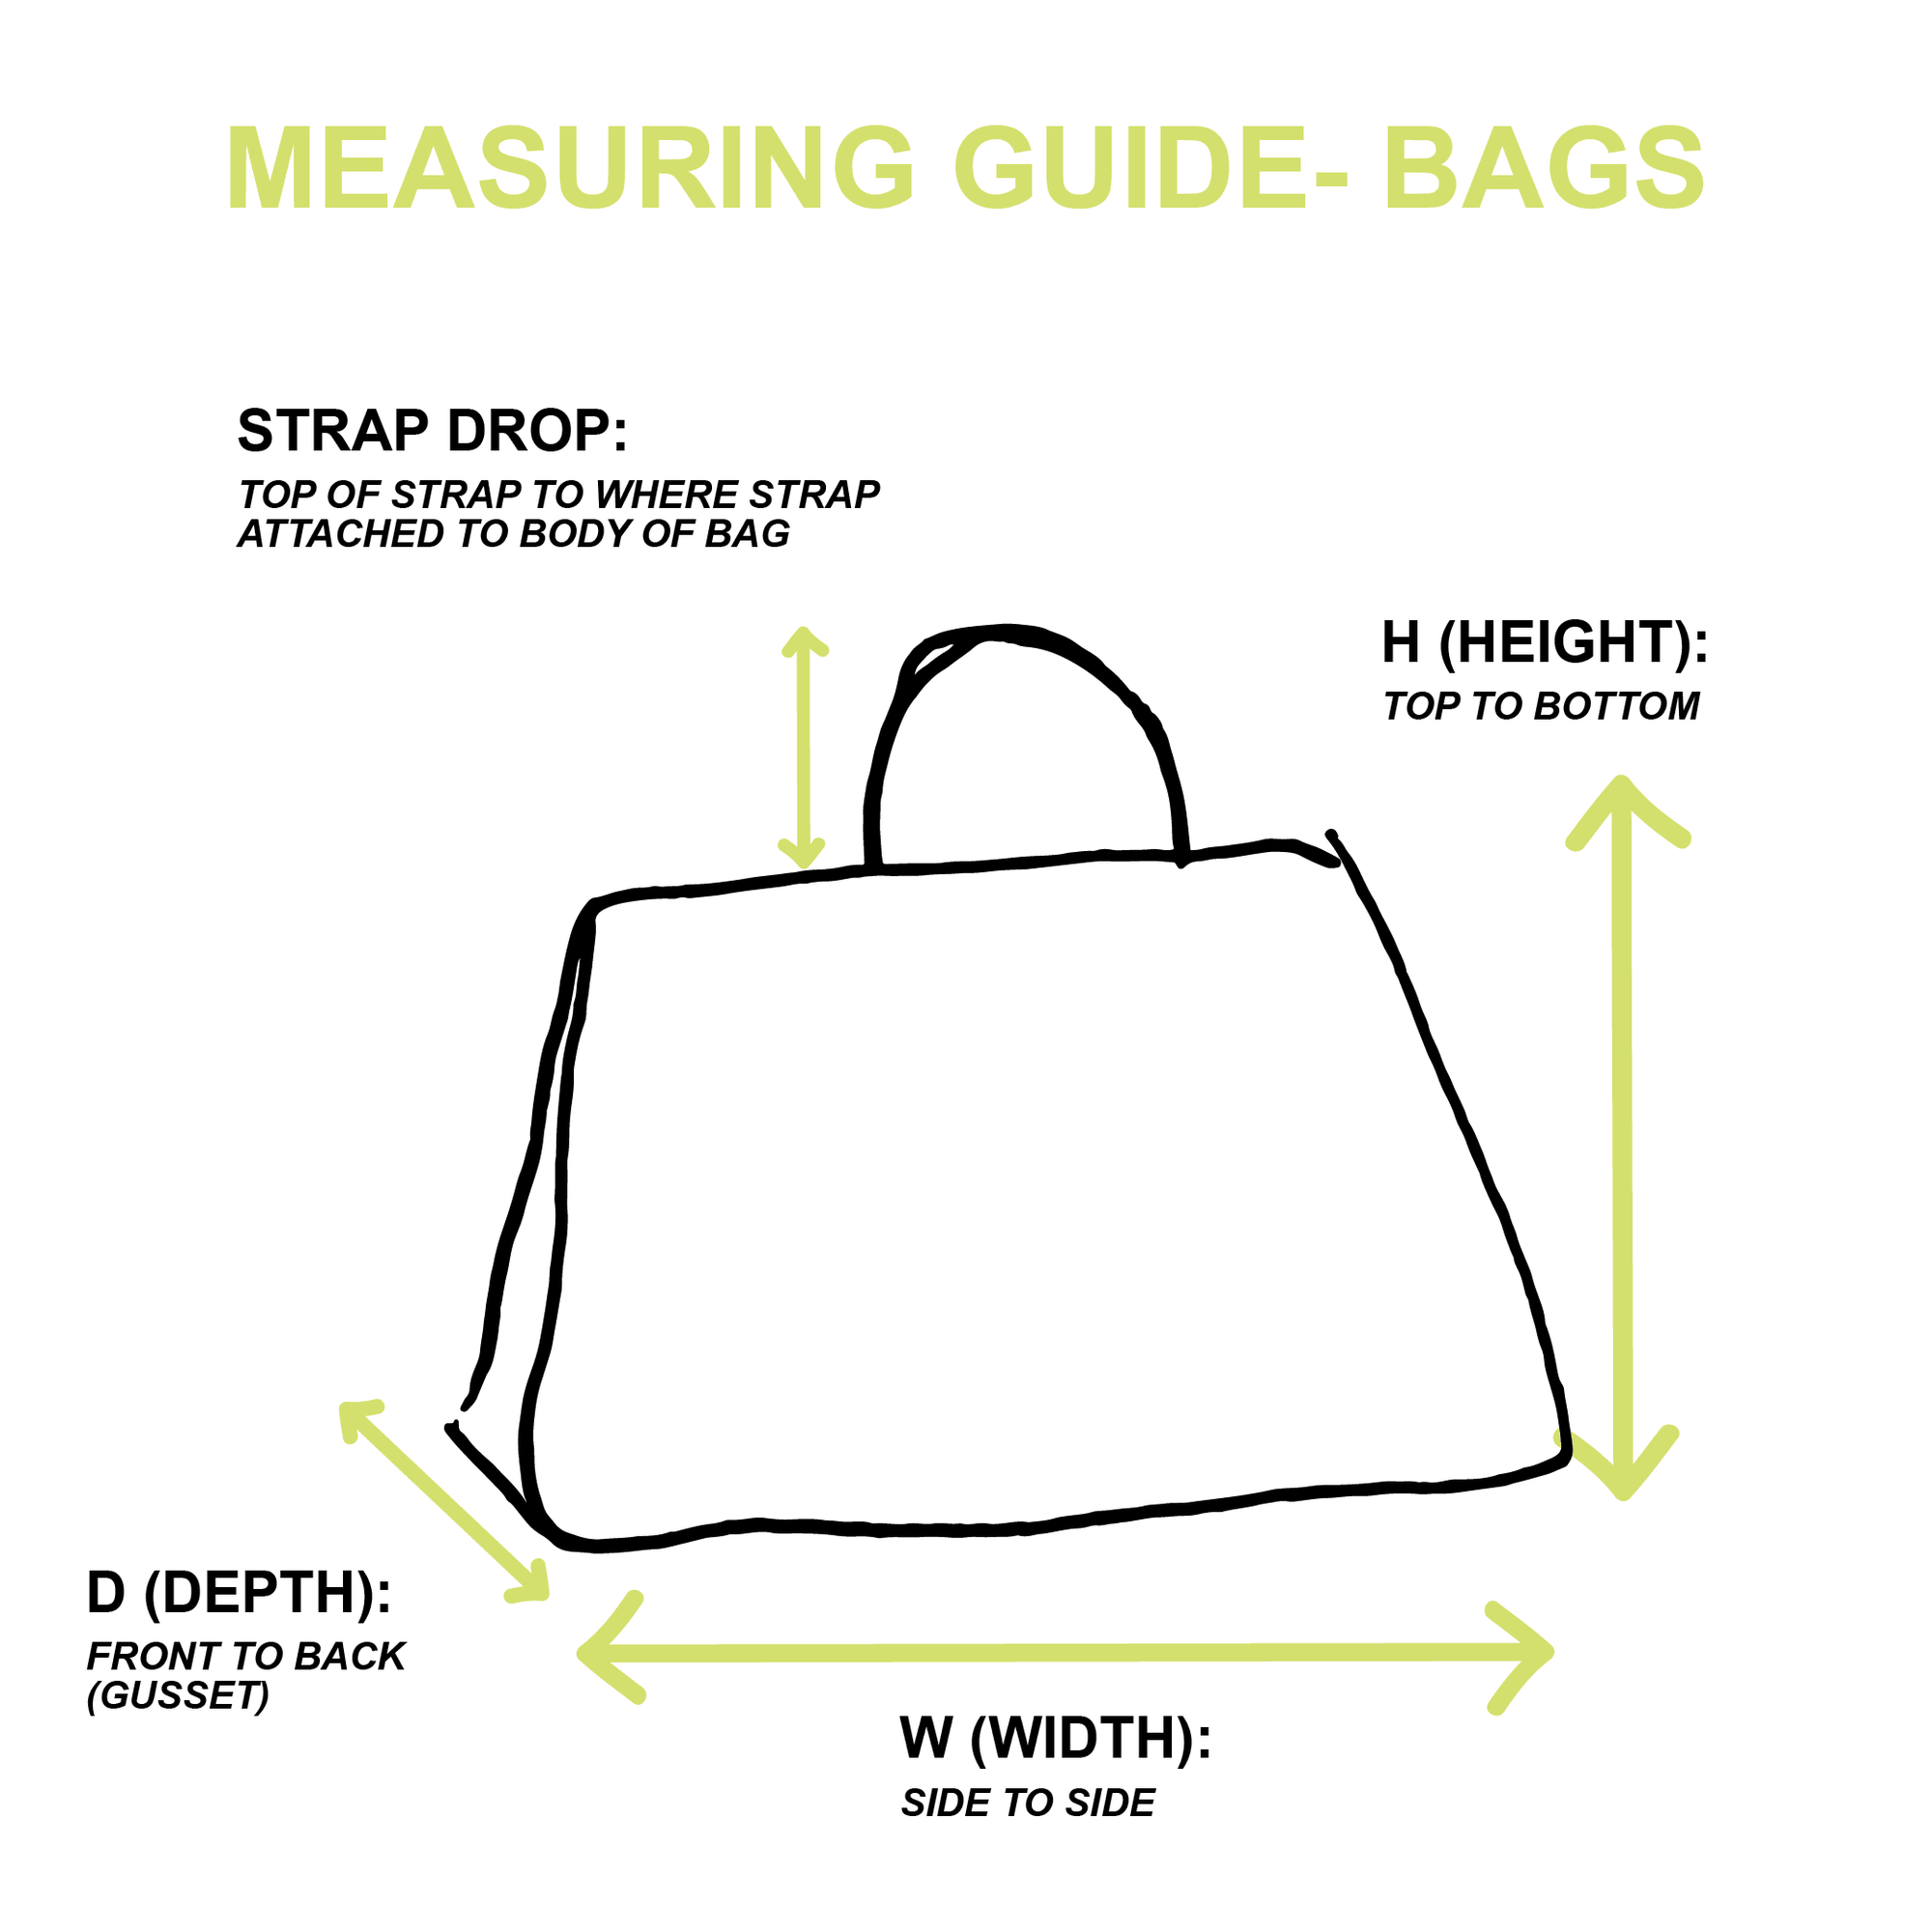 Dior Denim Logo Tote - Handbags